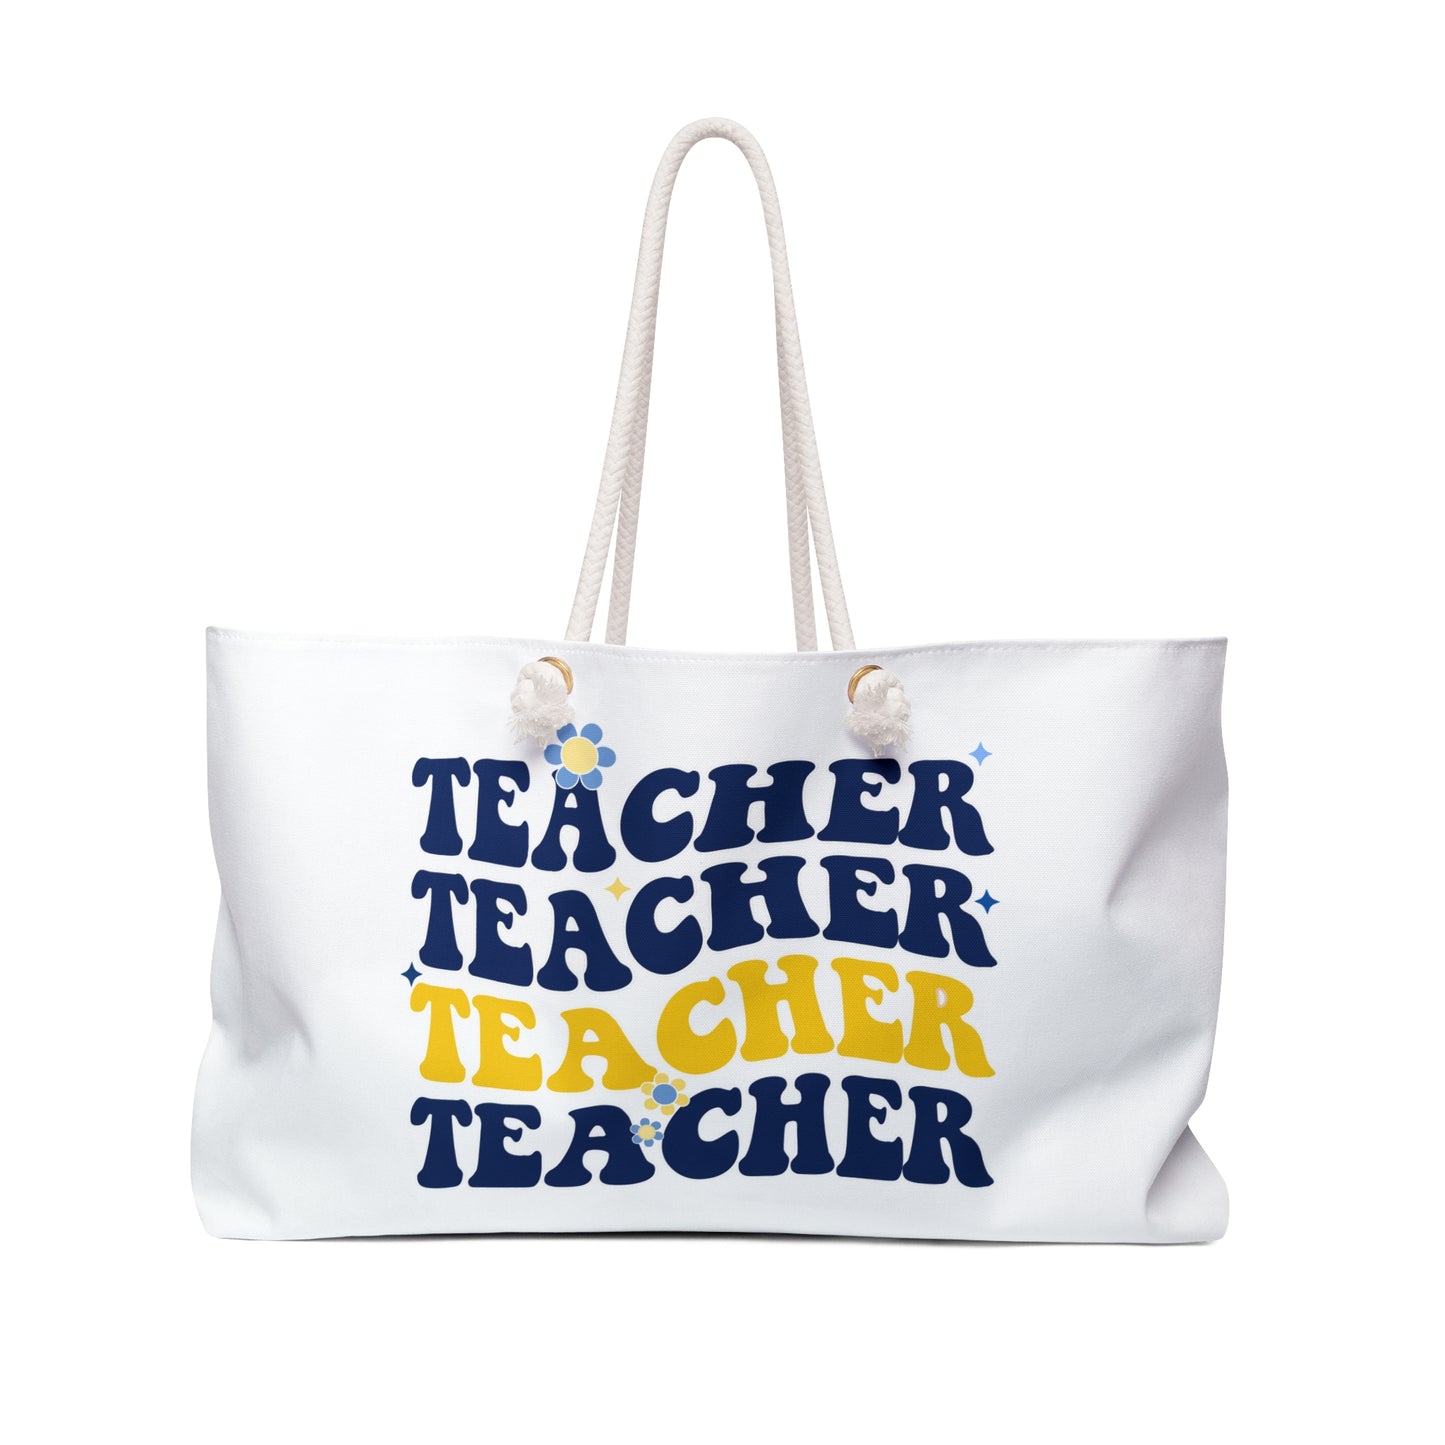 Personalized Oxford Teacher Weekender Bag